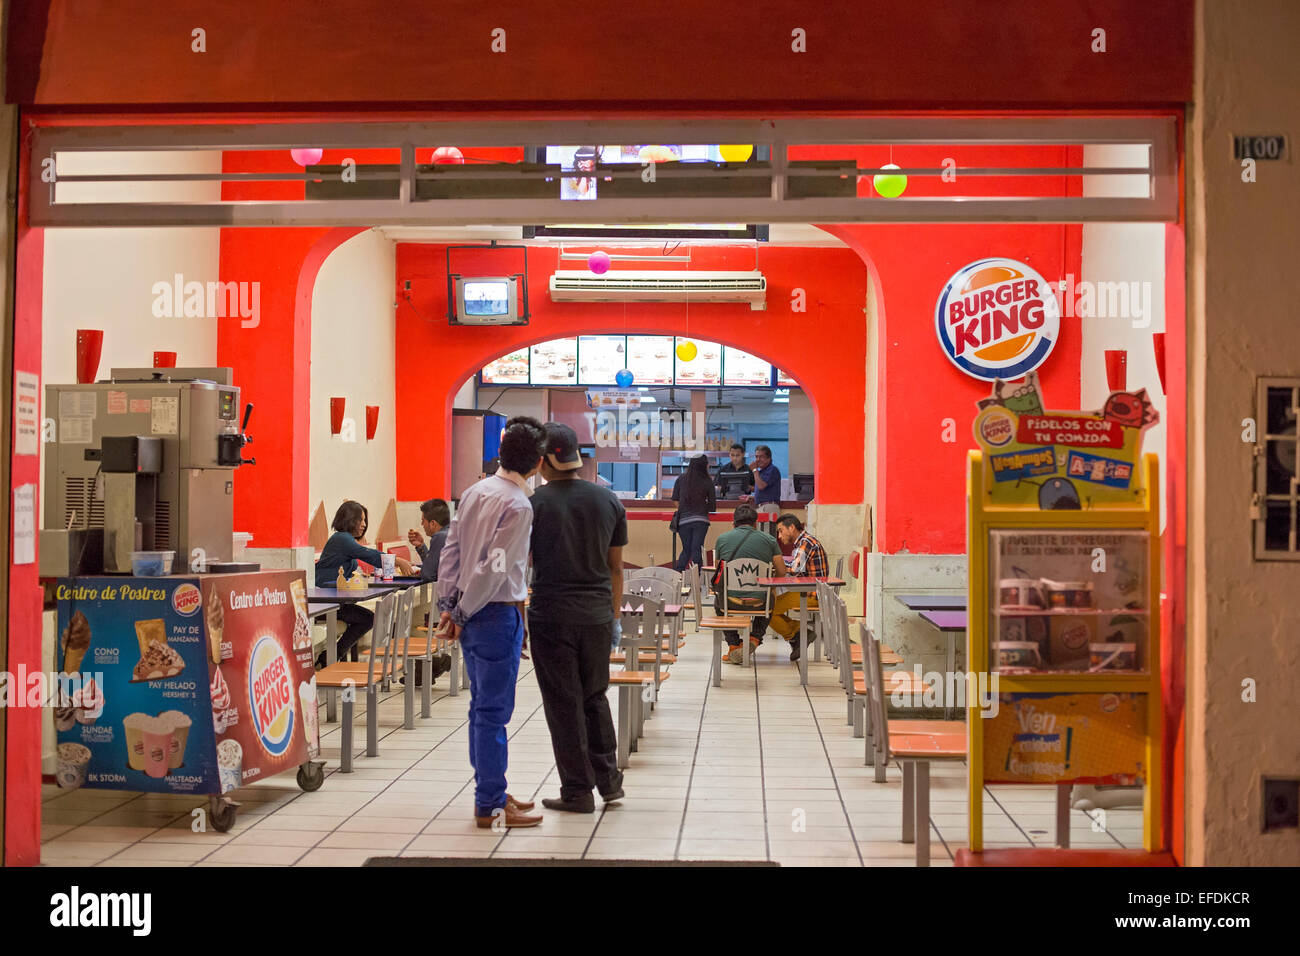 Oaxaca, Mexico - A Burger King store in Mexico. Stock Photo